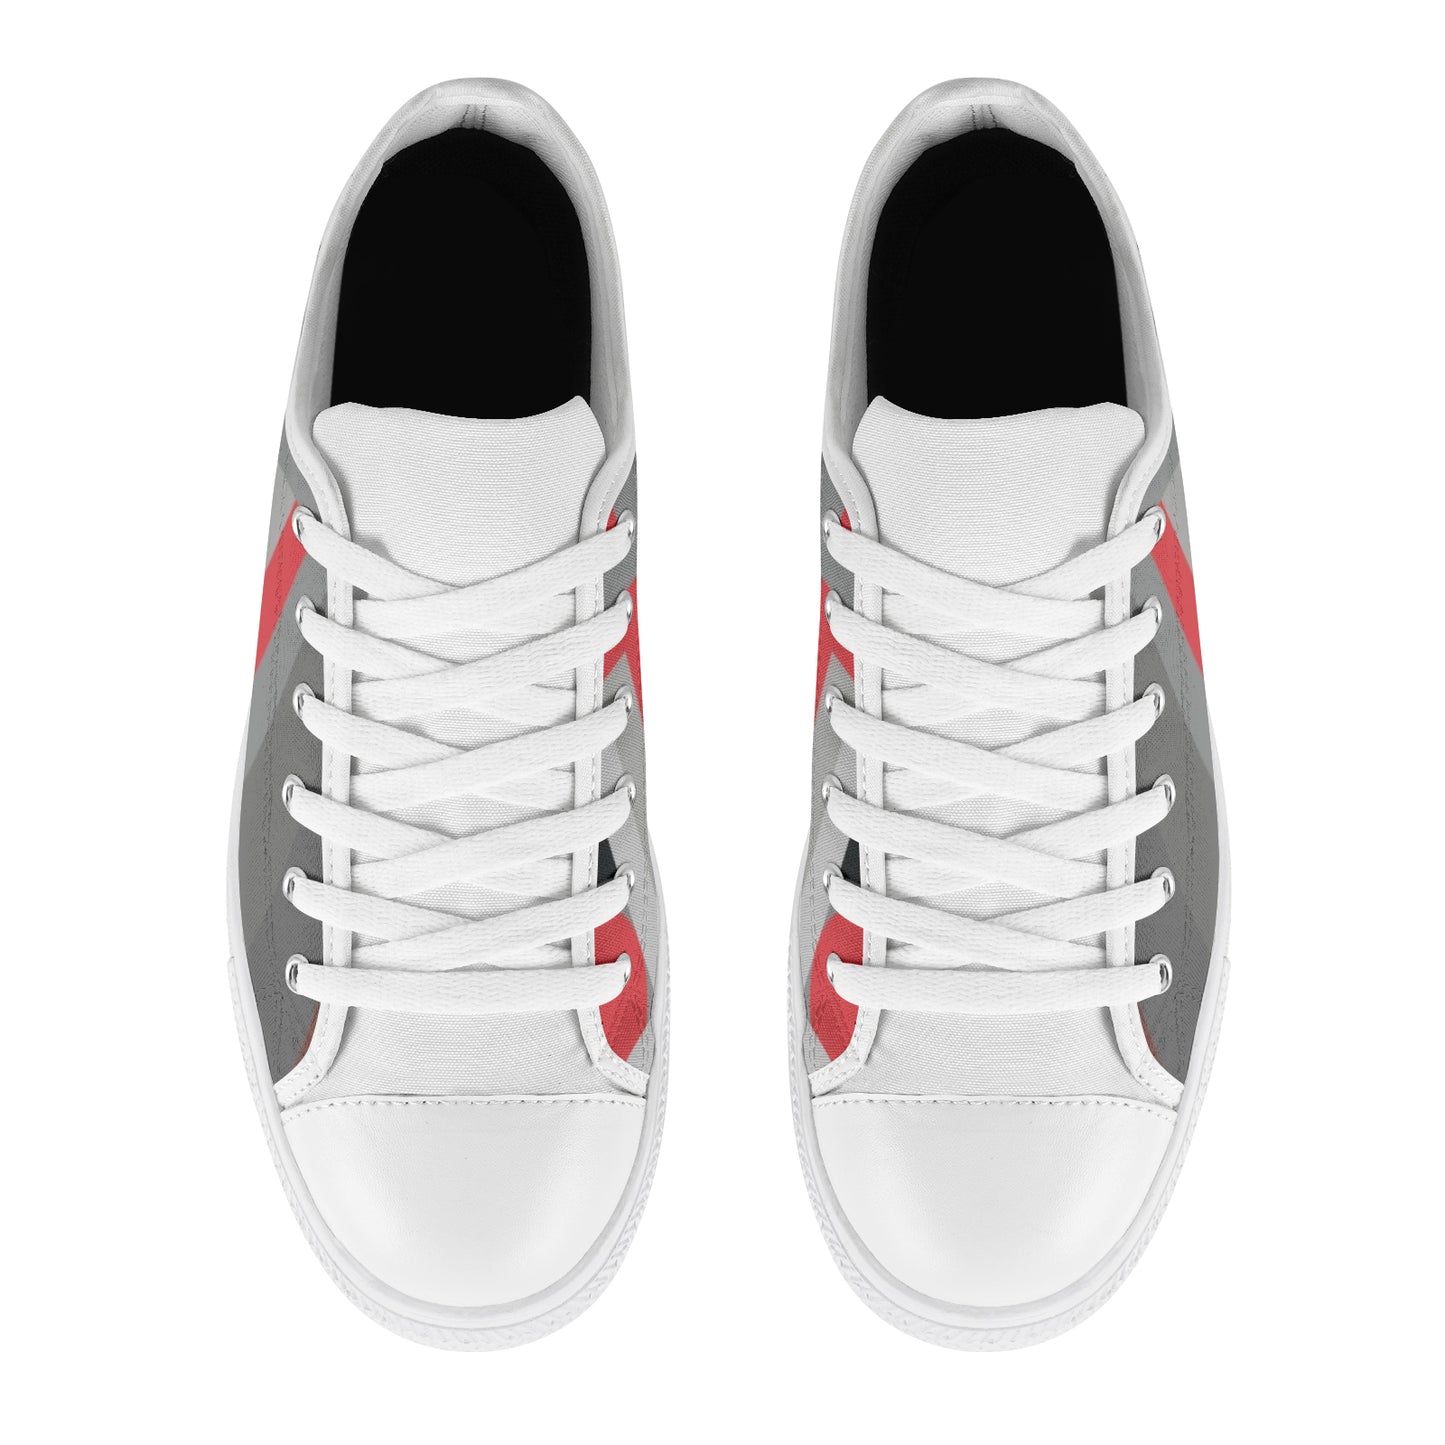 Men's Canvas Sneakers - Red/Black/Grey